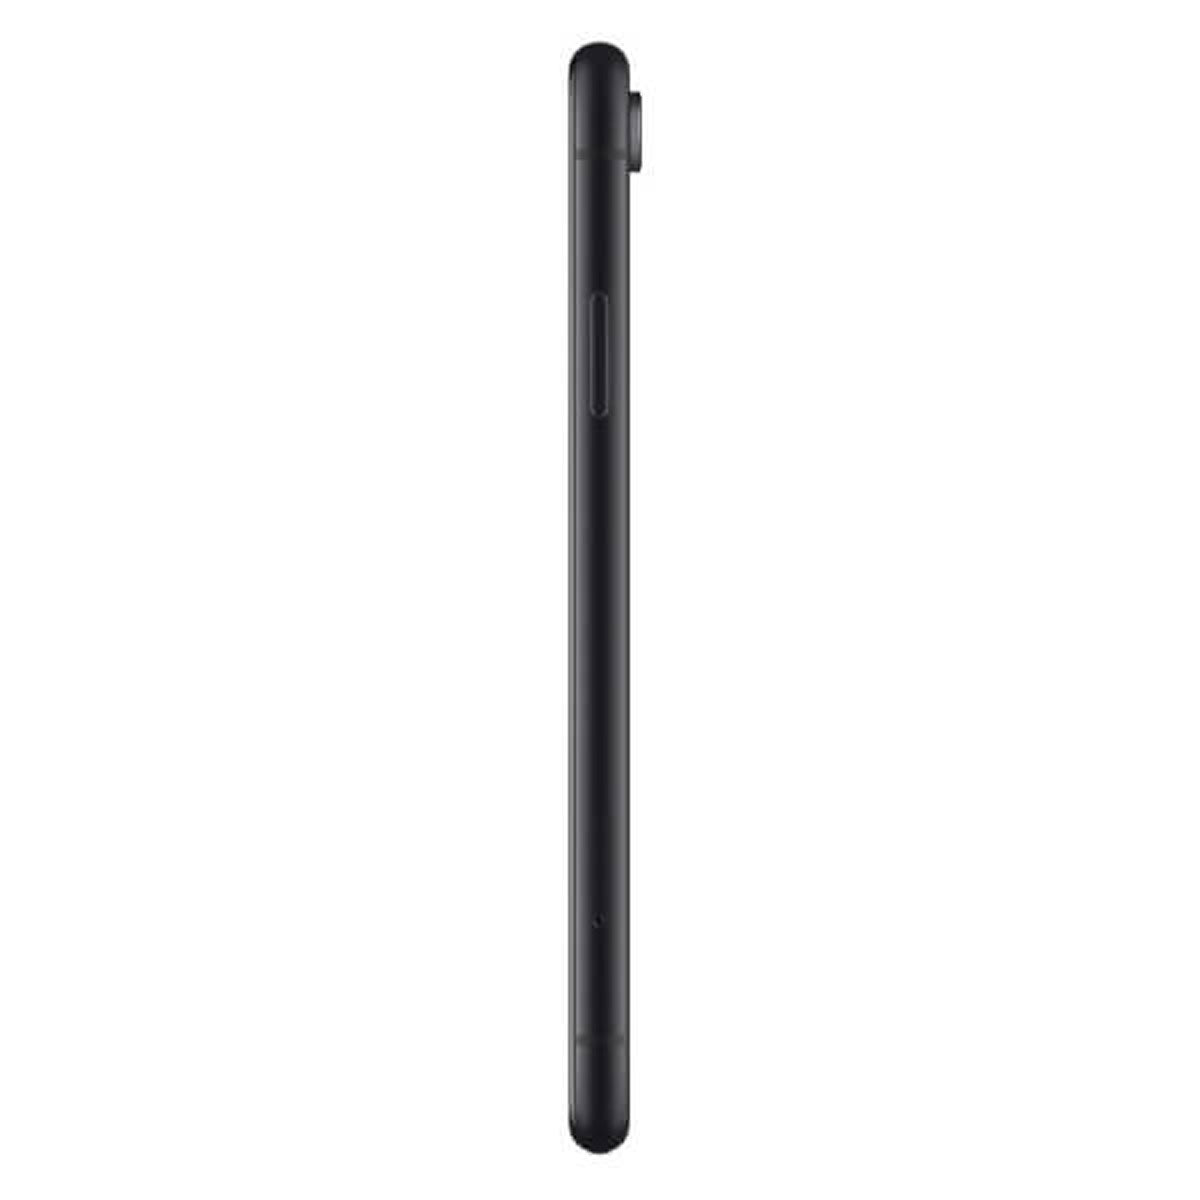 Apple iPhone XR 64 GB Negro